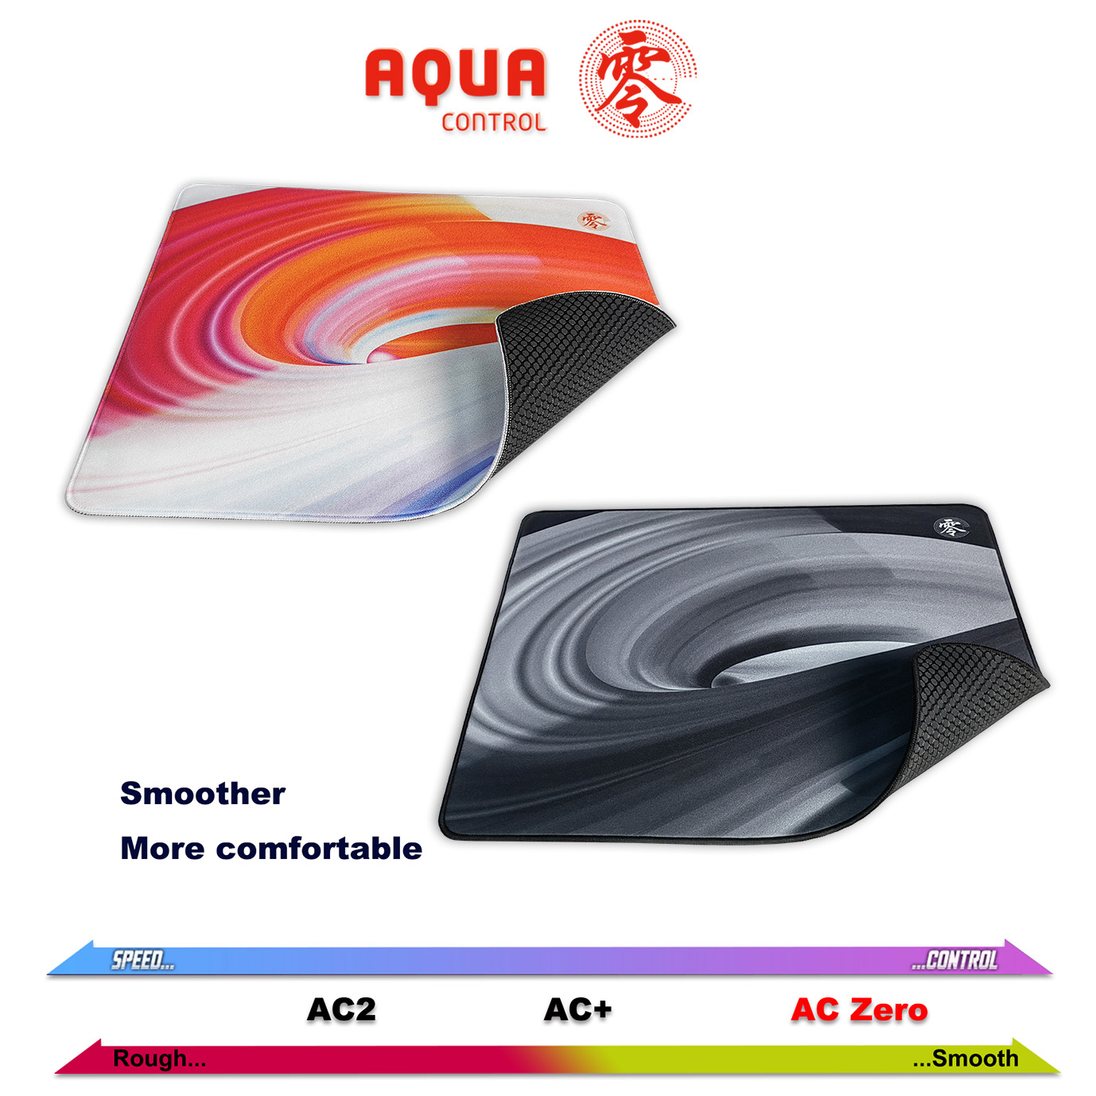 X-raypad Aqua Control Zero Orange XL